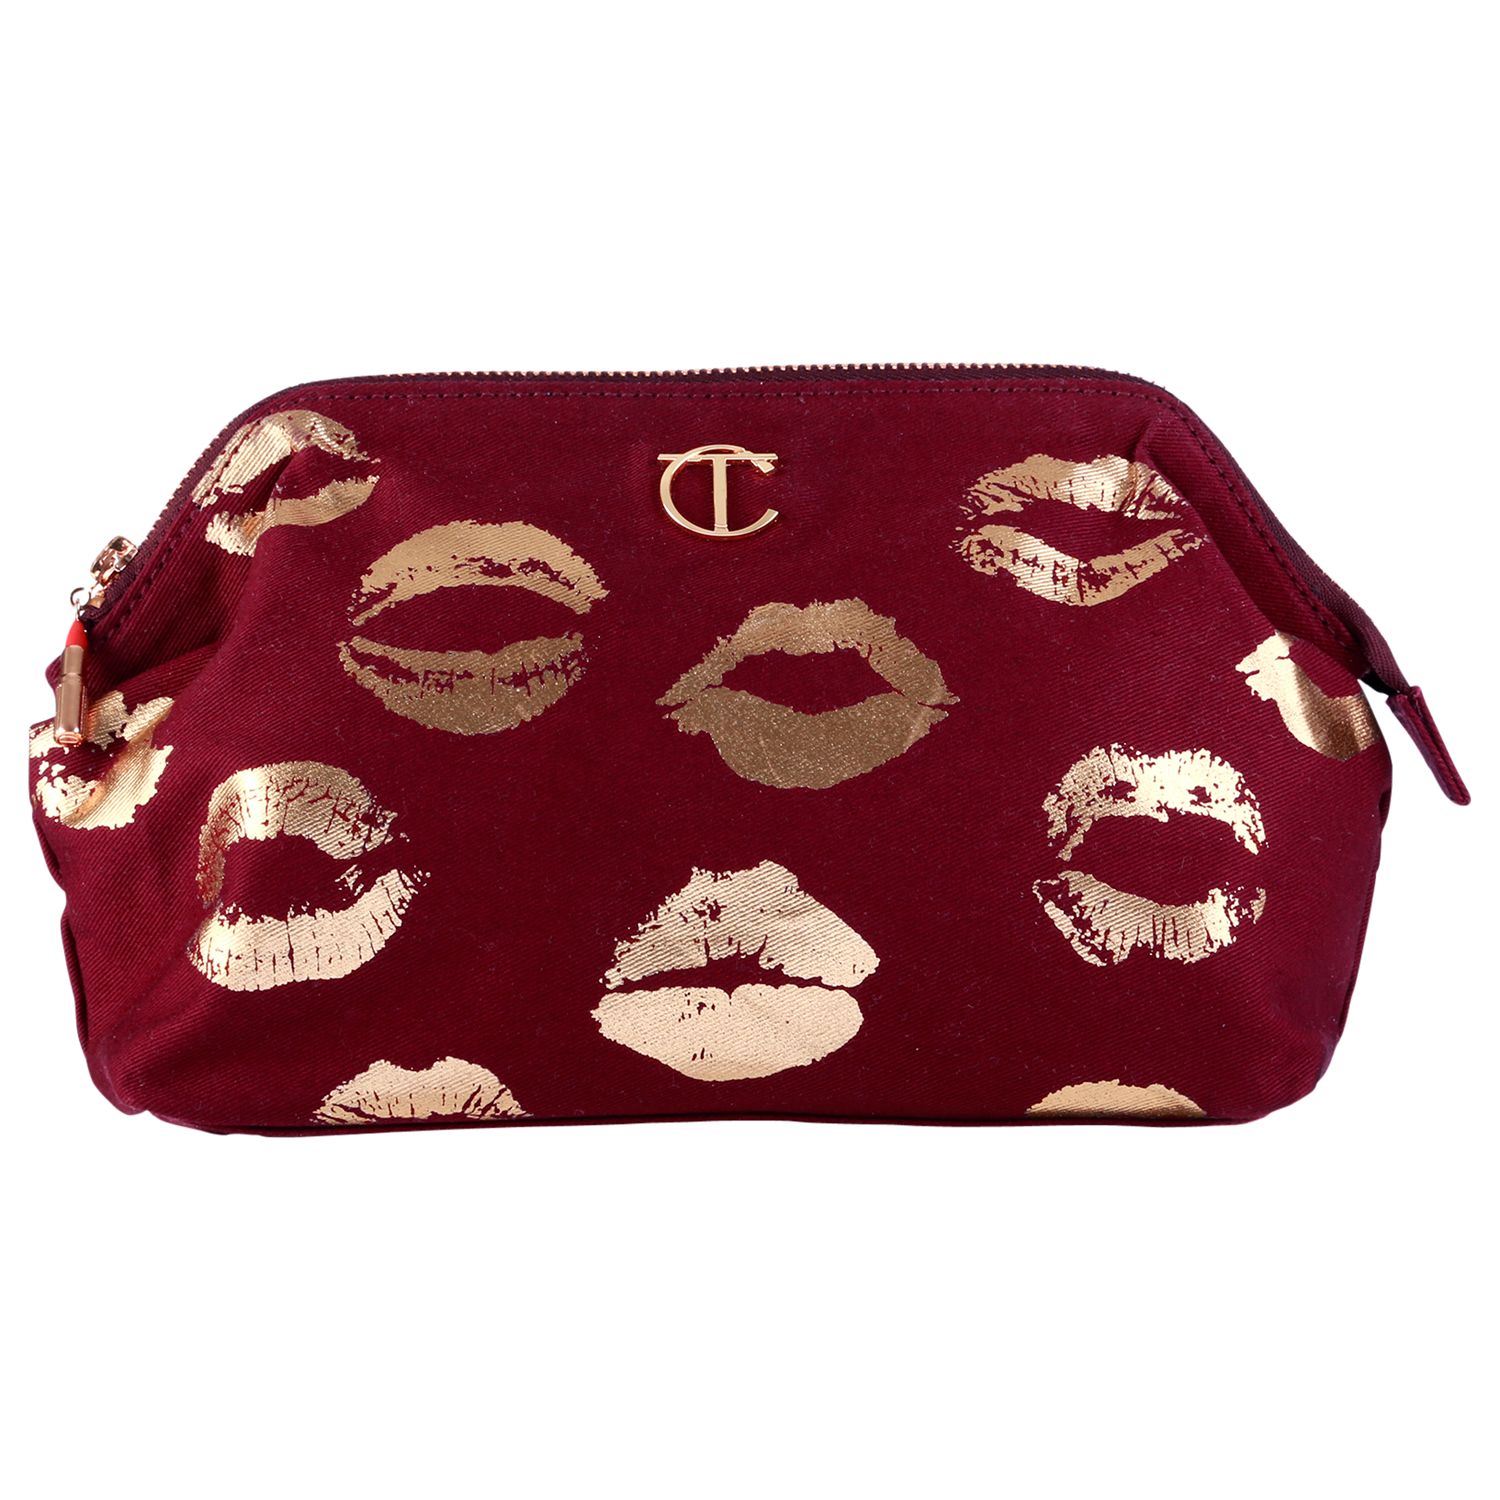 Charlotte Tilbury Limited Edition Makeup Bag